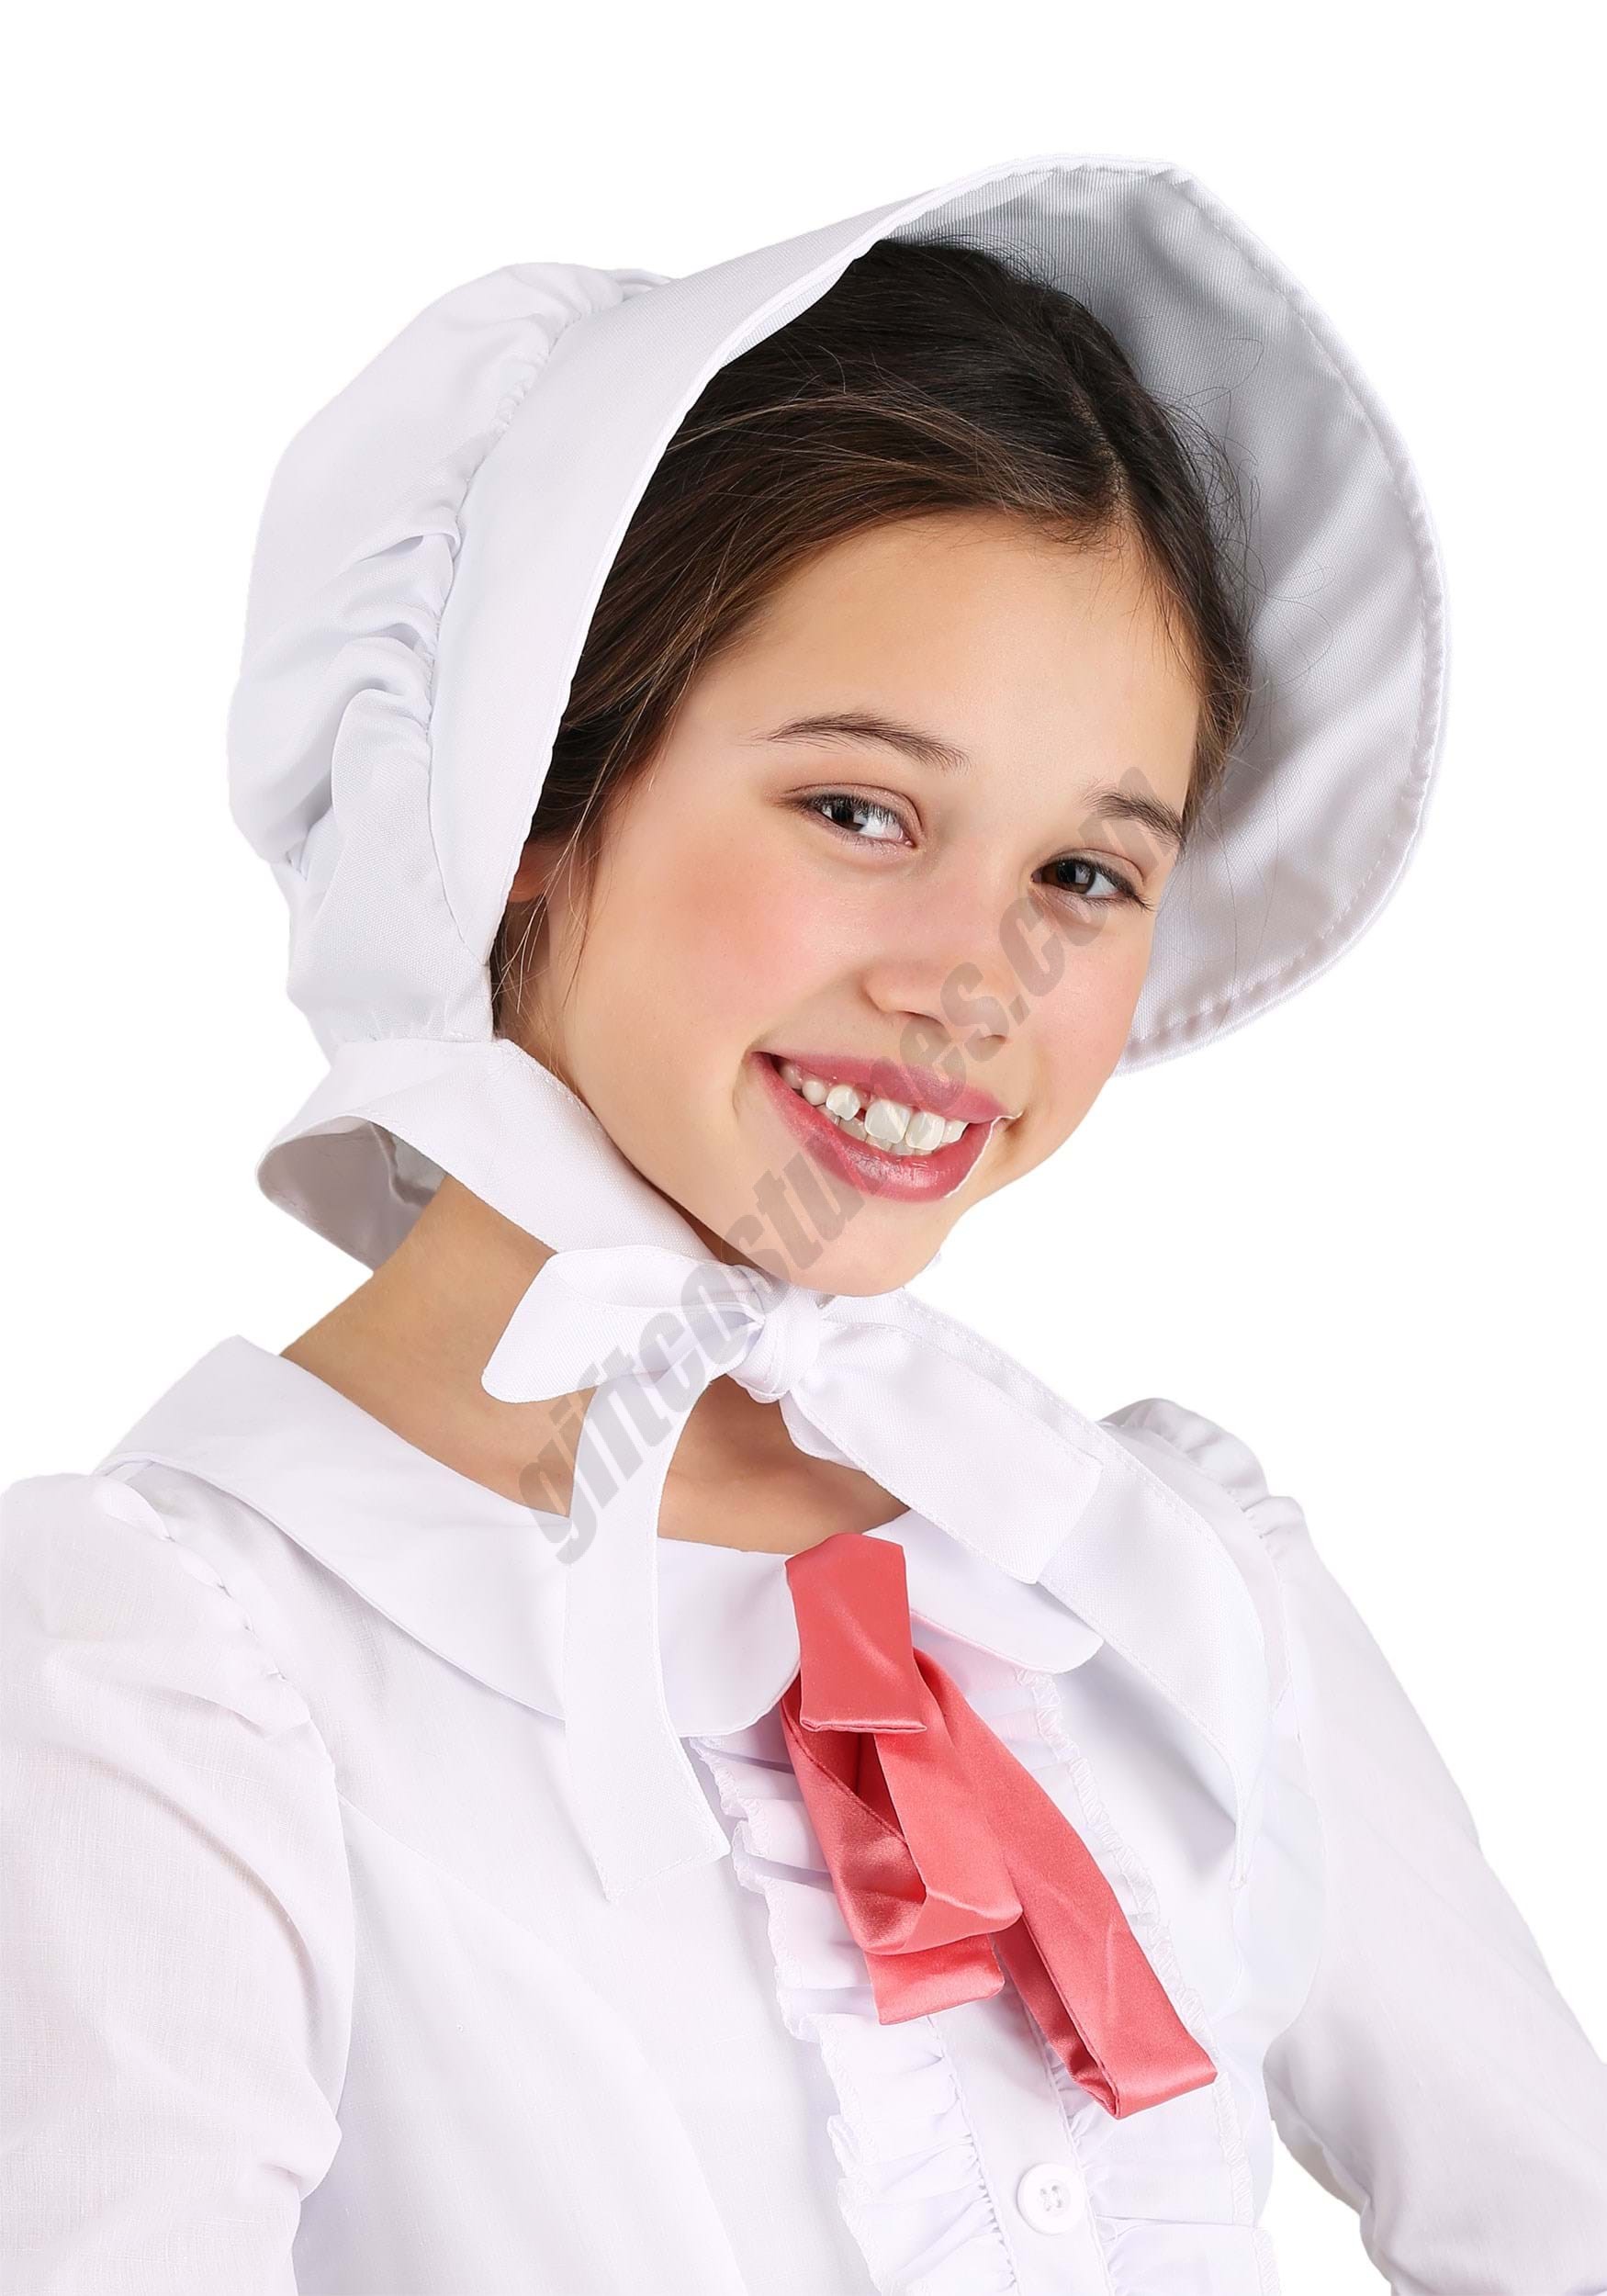 Girls White Pioneer Bonnet Promotions - Girls White Pioneer Bonnet Promotions